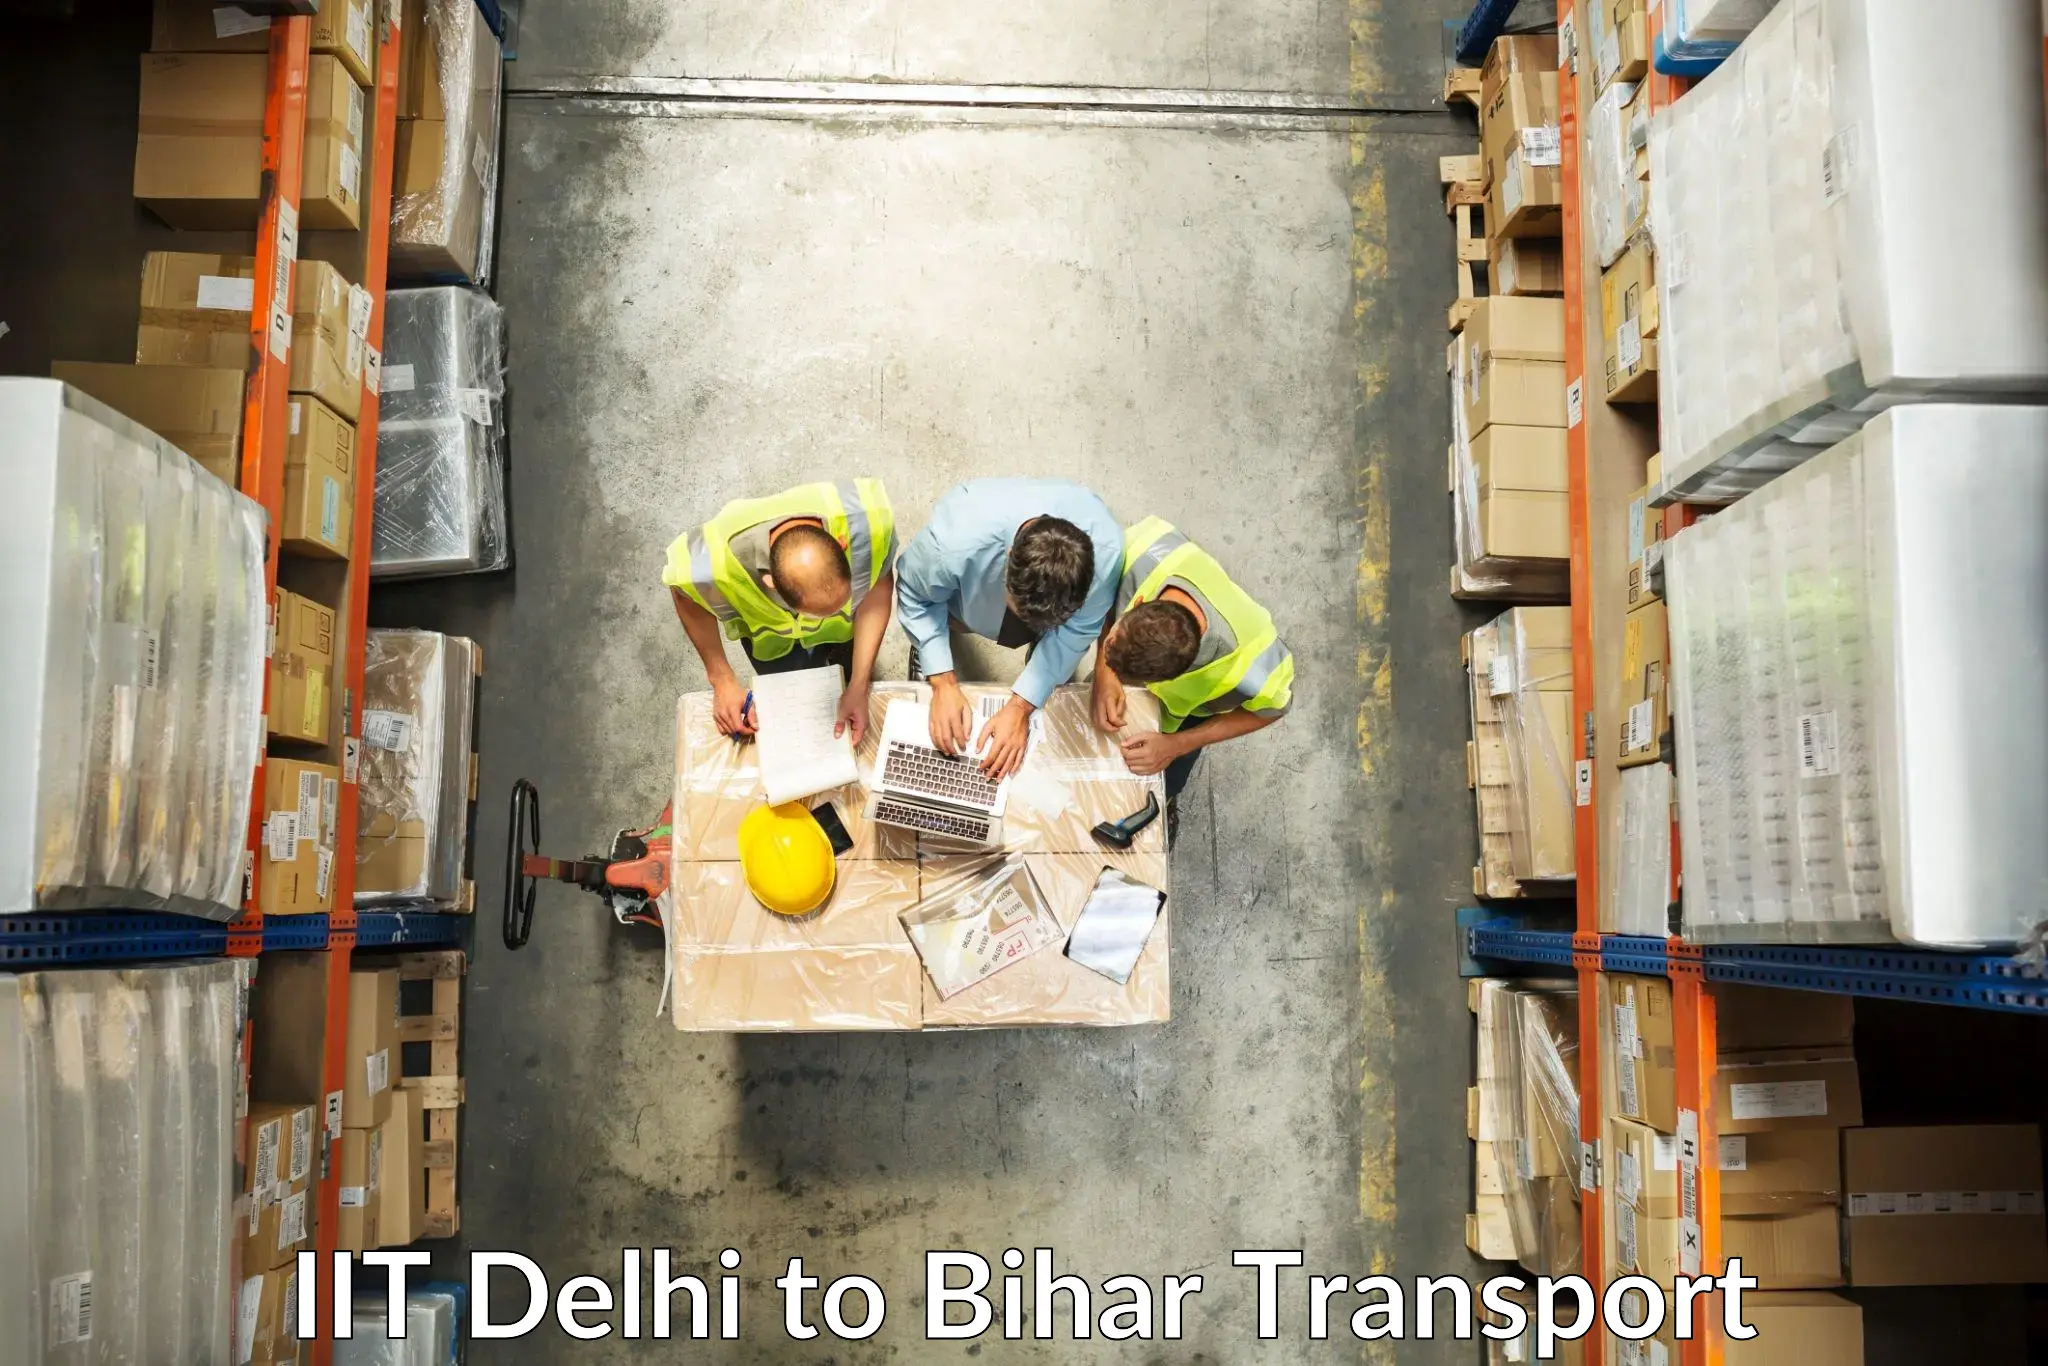 Shipping partner IIT Delhi to Mahaddipur